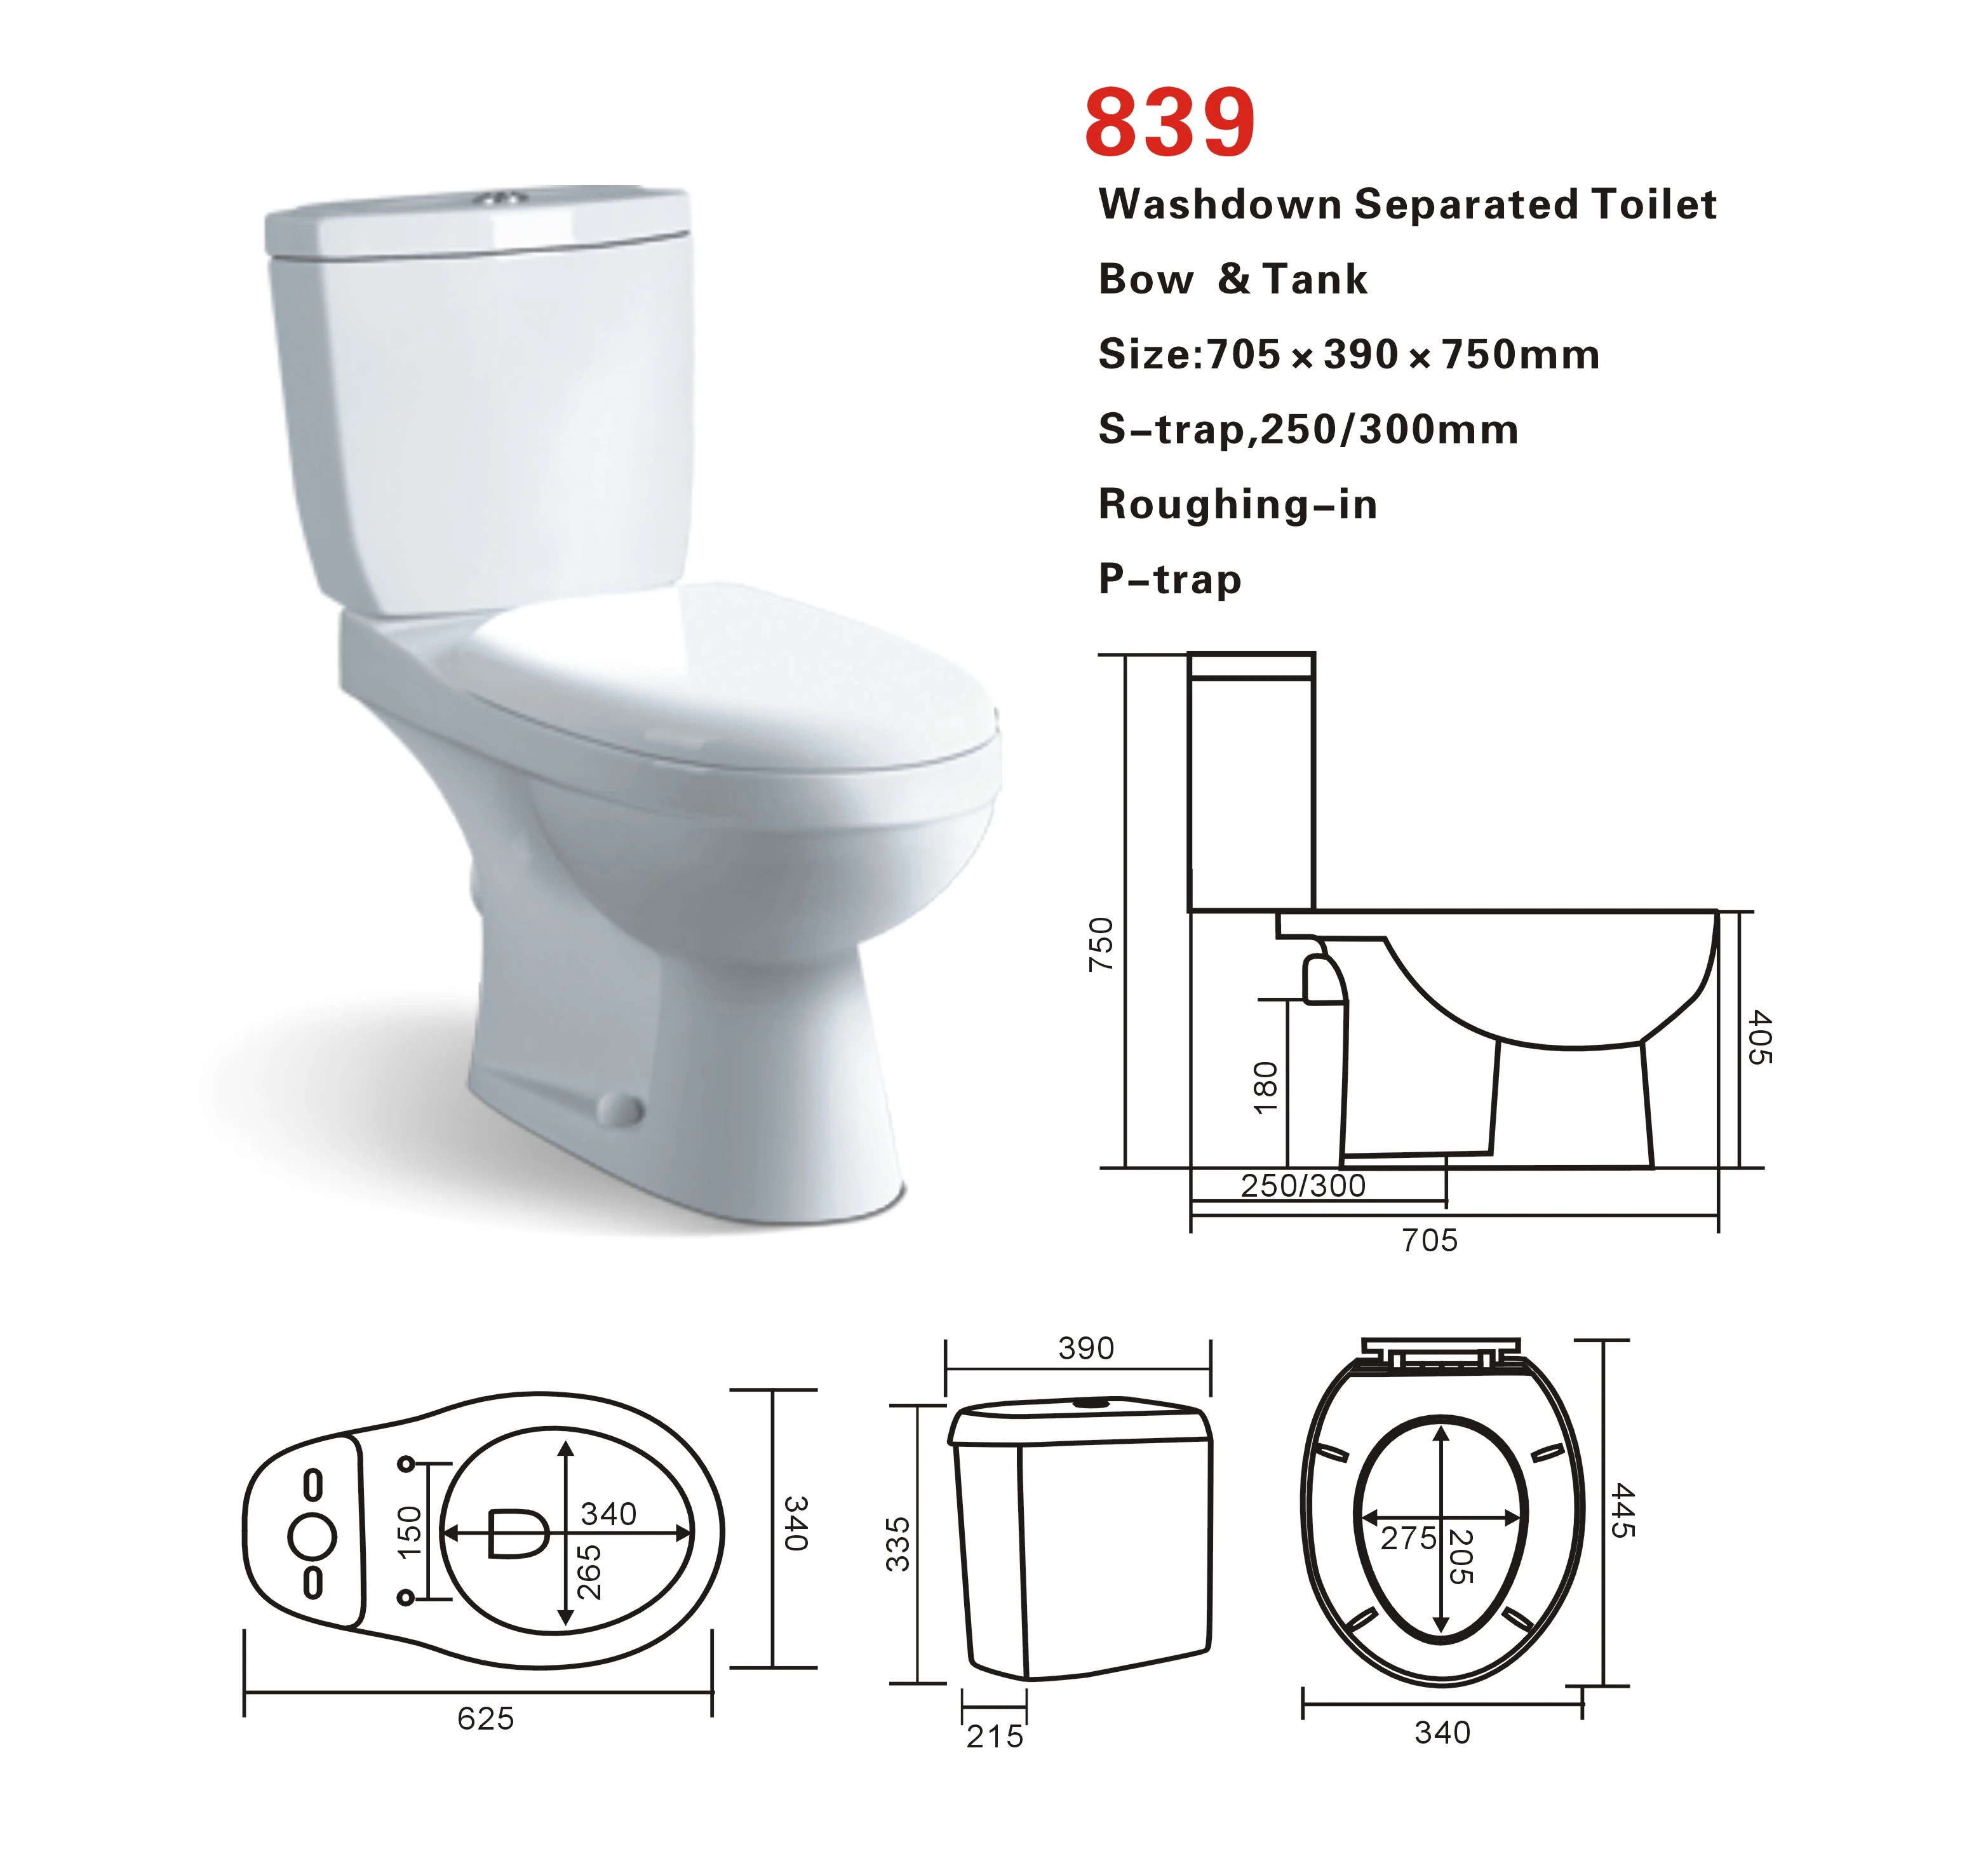 New economic sanitary ware bathroom ceramic washdown two piece wc toilet